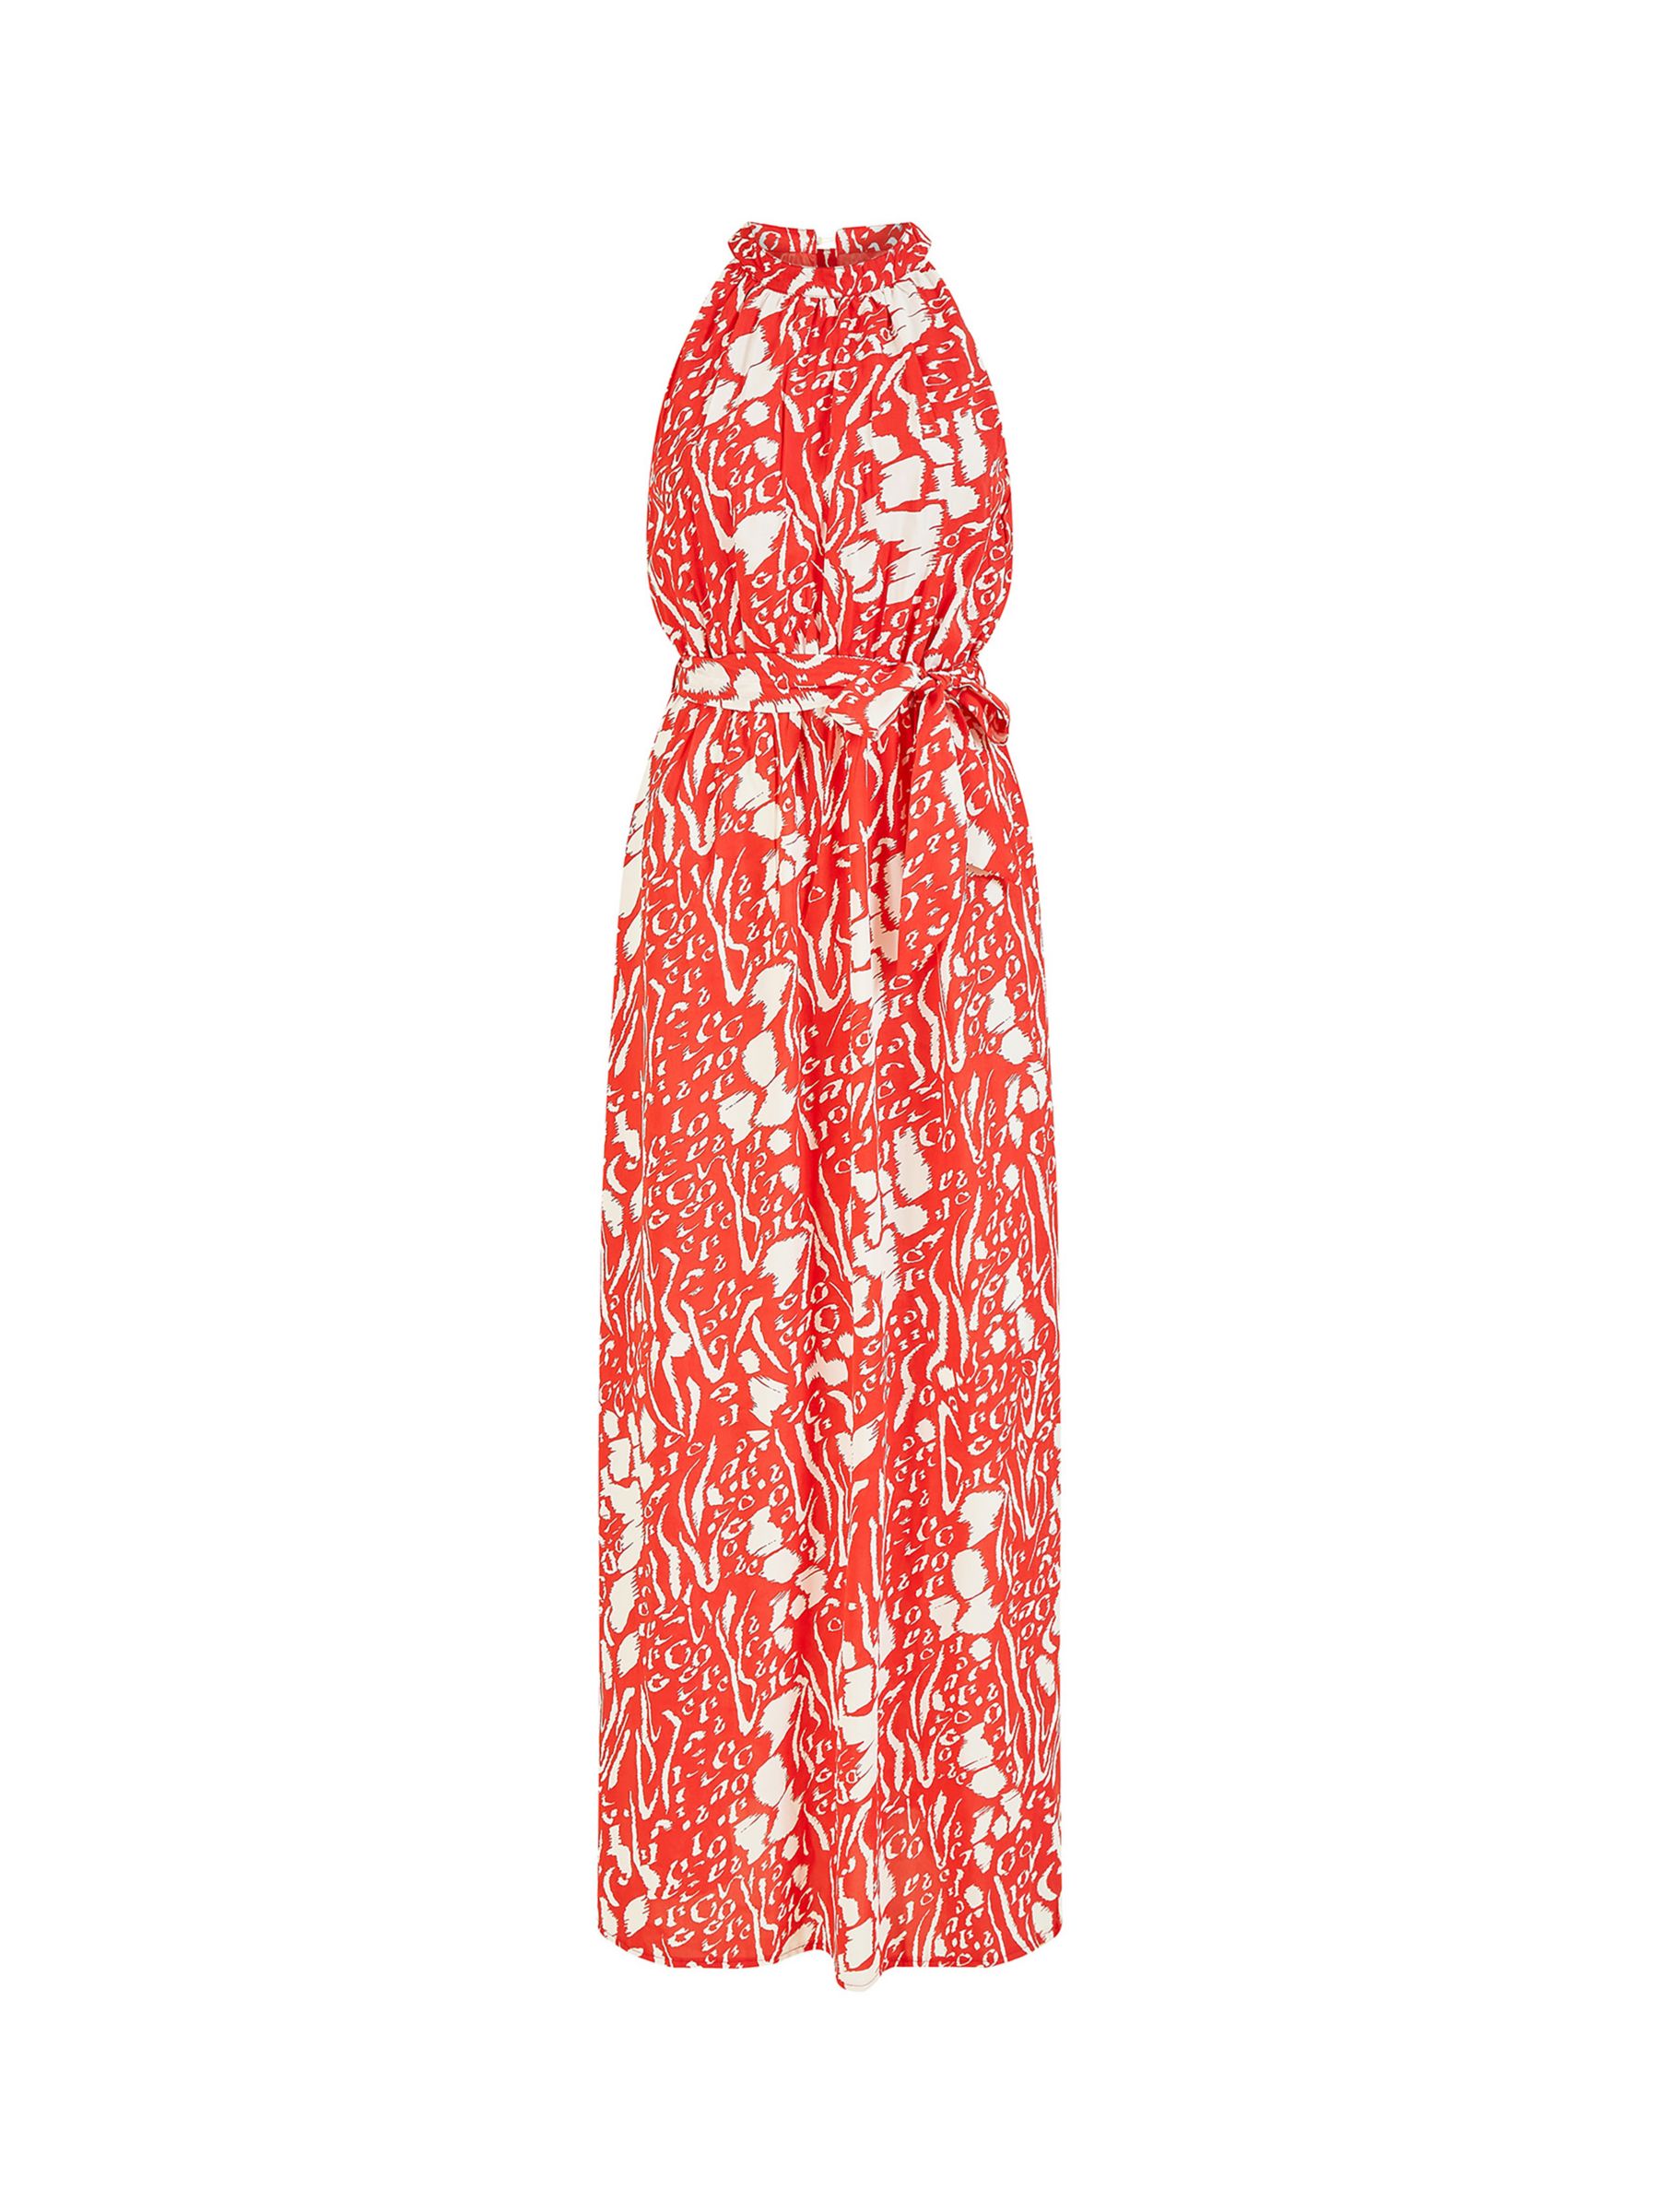 Mela London Animal Print Maxi Dress, Red, 8